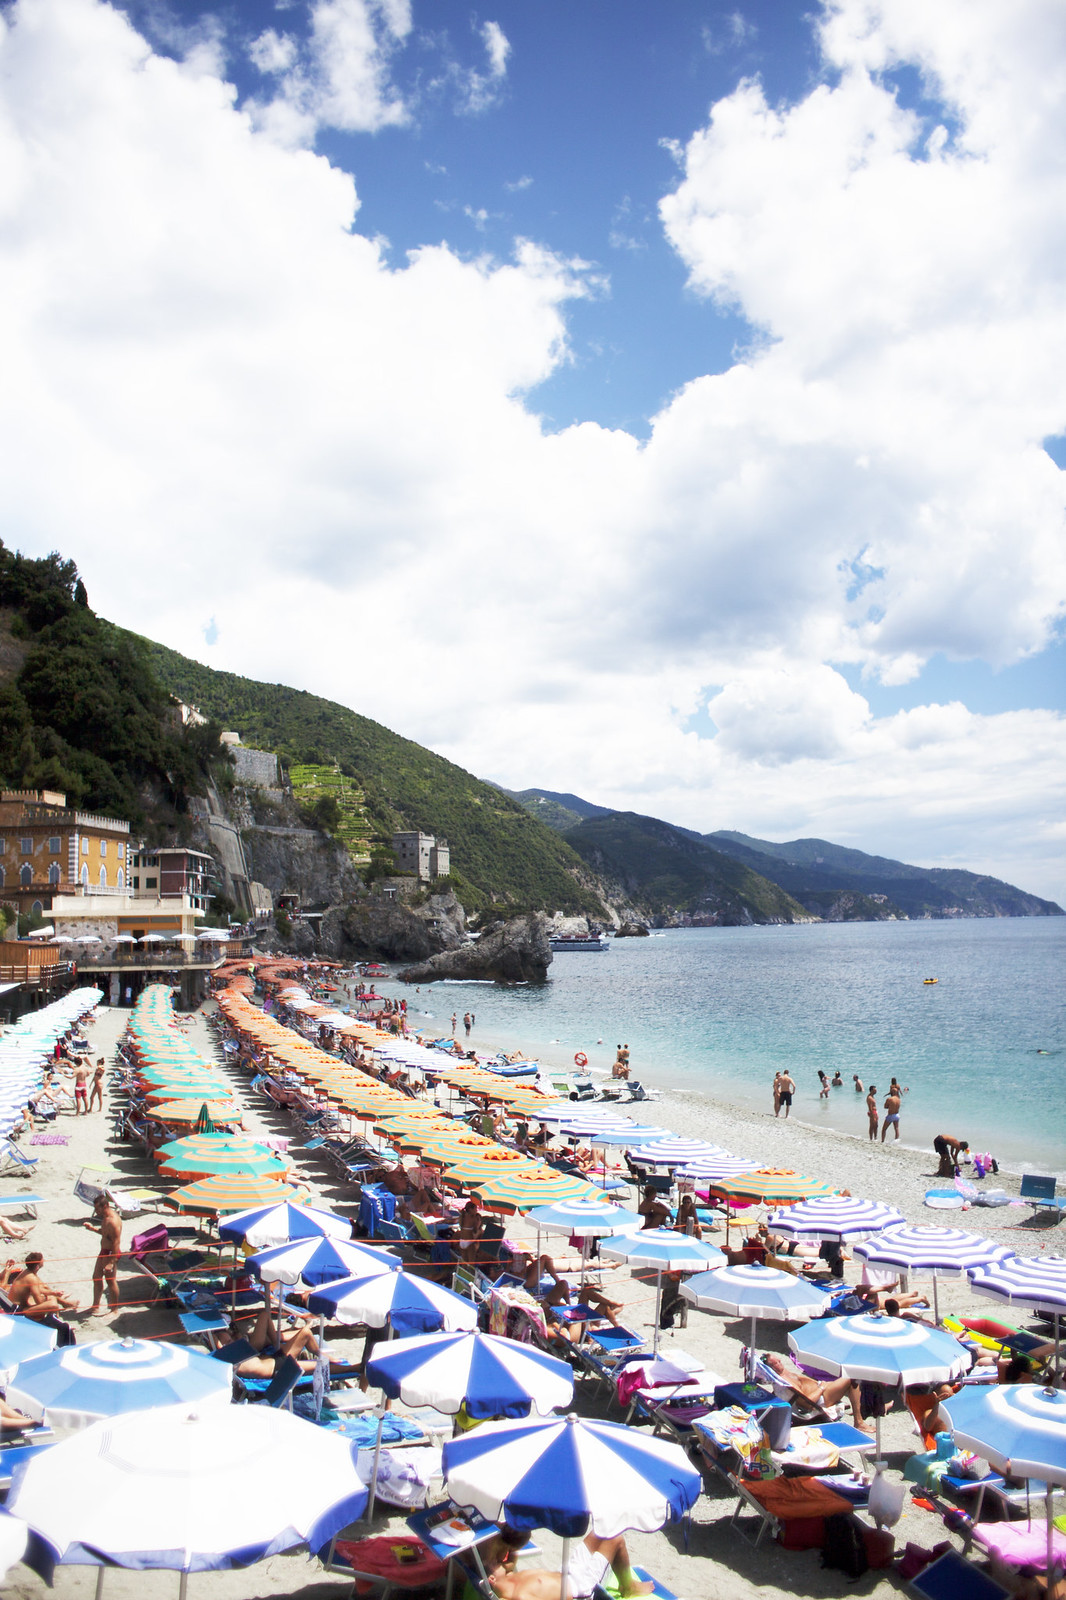 Beach umbrellas in Monterosso, Cinque Terre, Italy